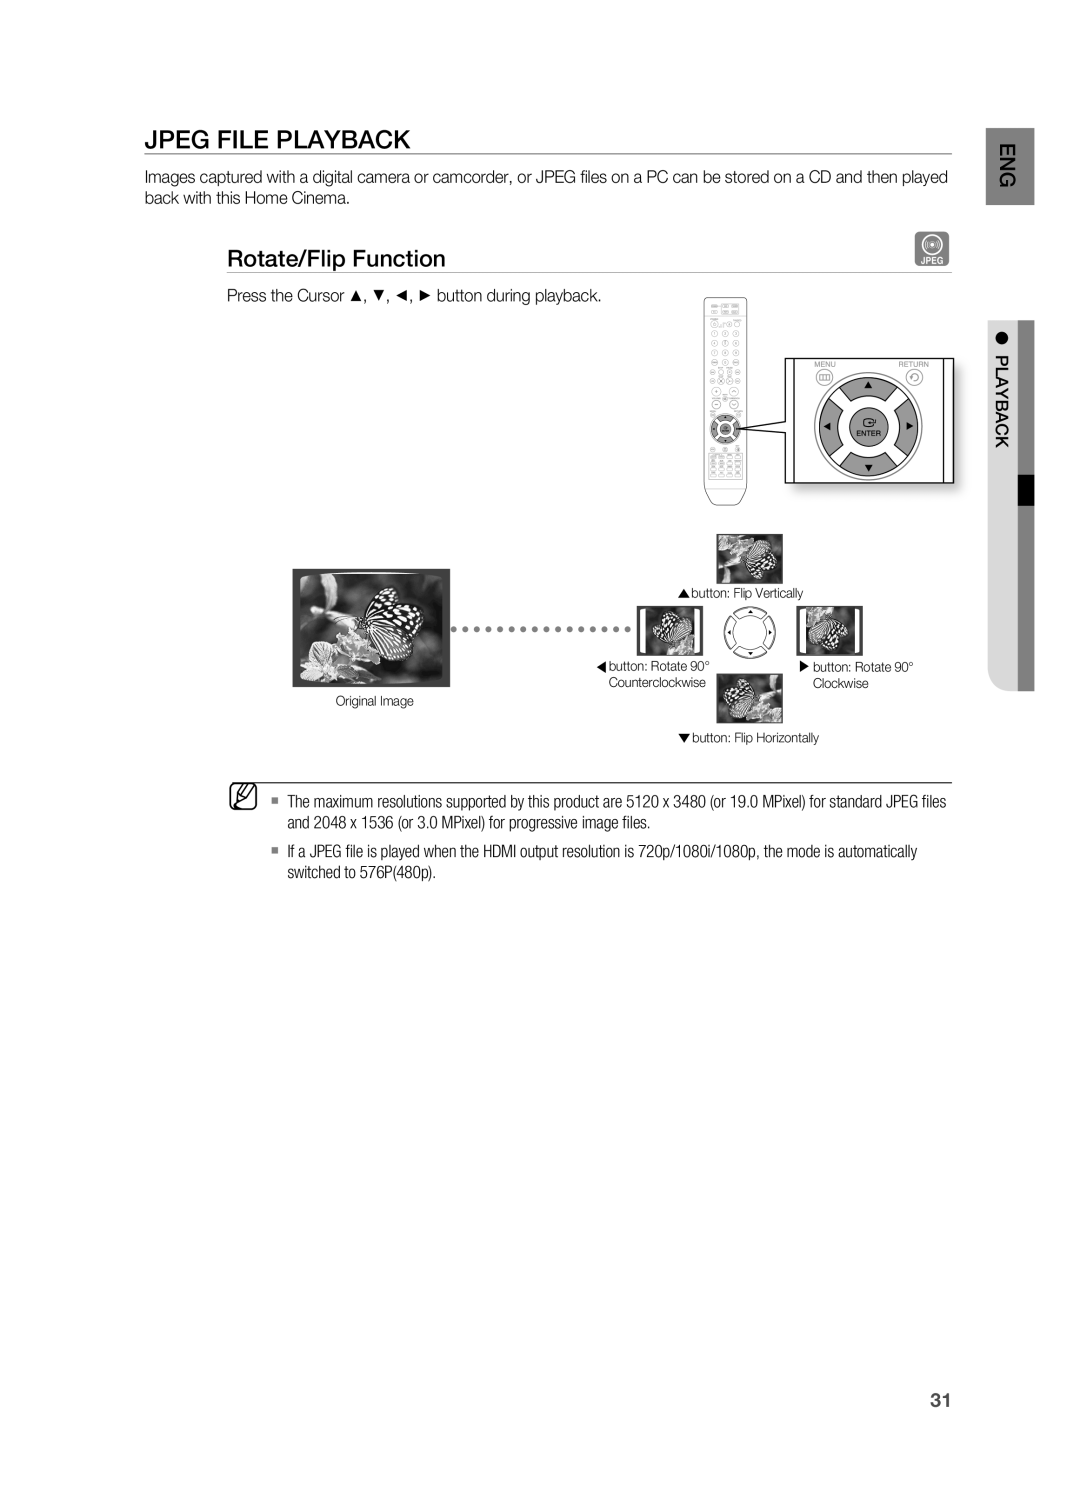 Samsung HT-TX715 user manual Jpeg File Playback, rotate/Flip Function 